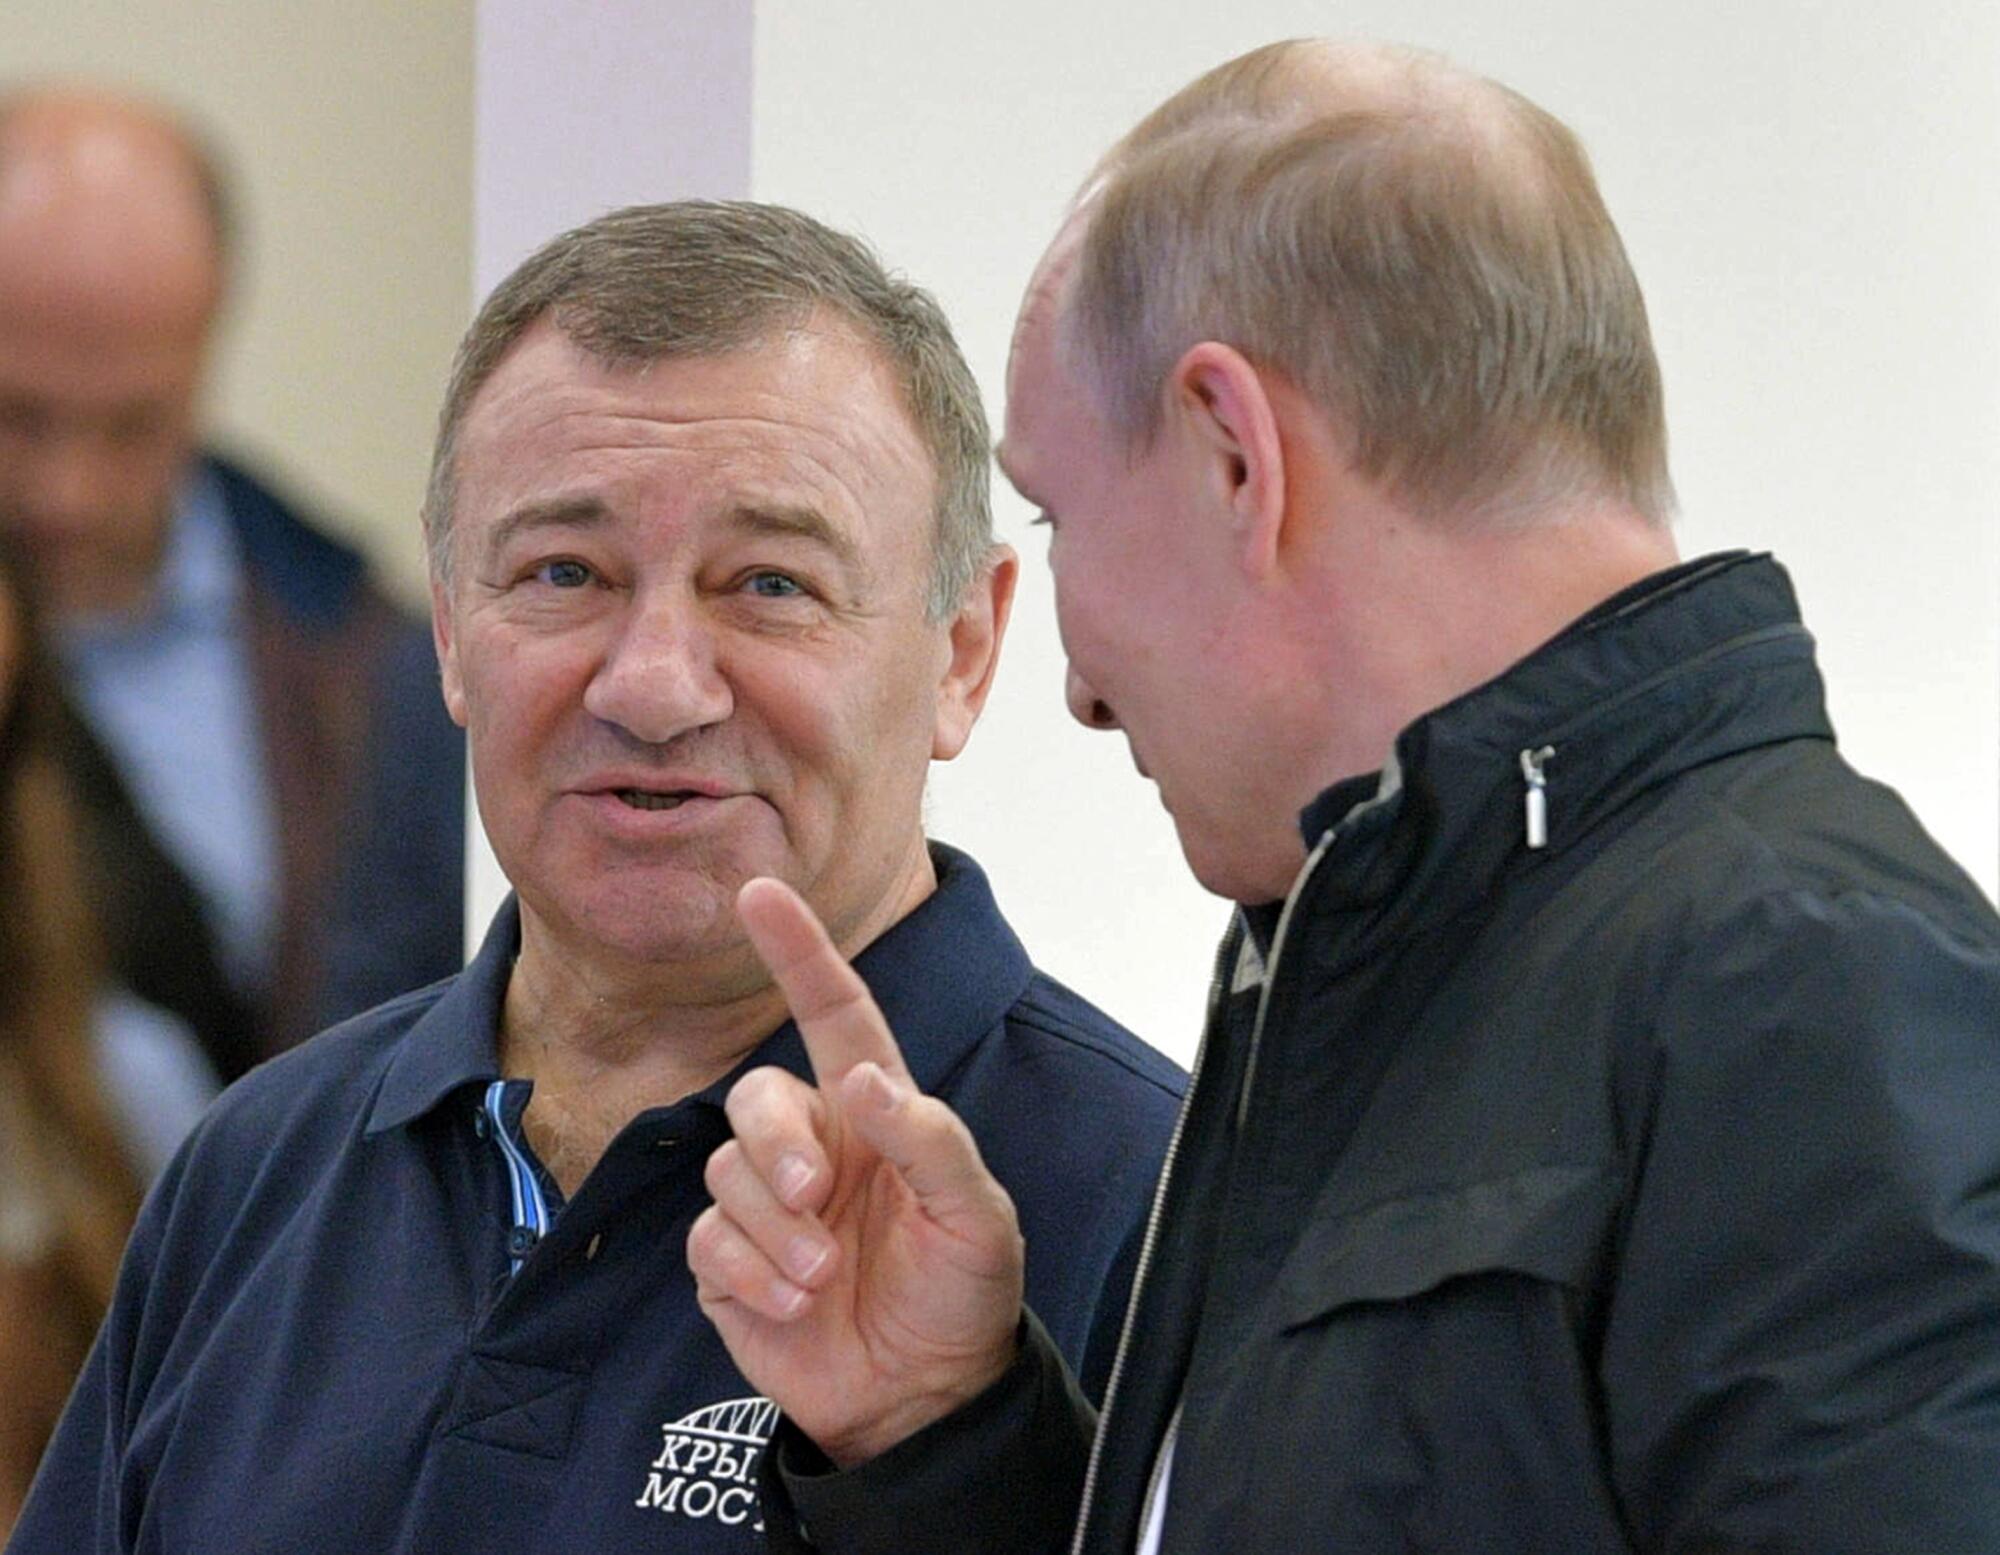 Russian President Vladimir Putin, right, gestures while speaking to Arkady Rotenberg